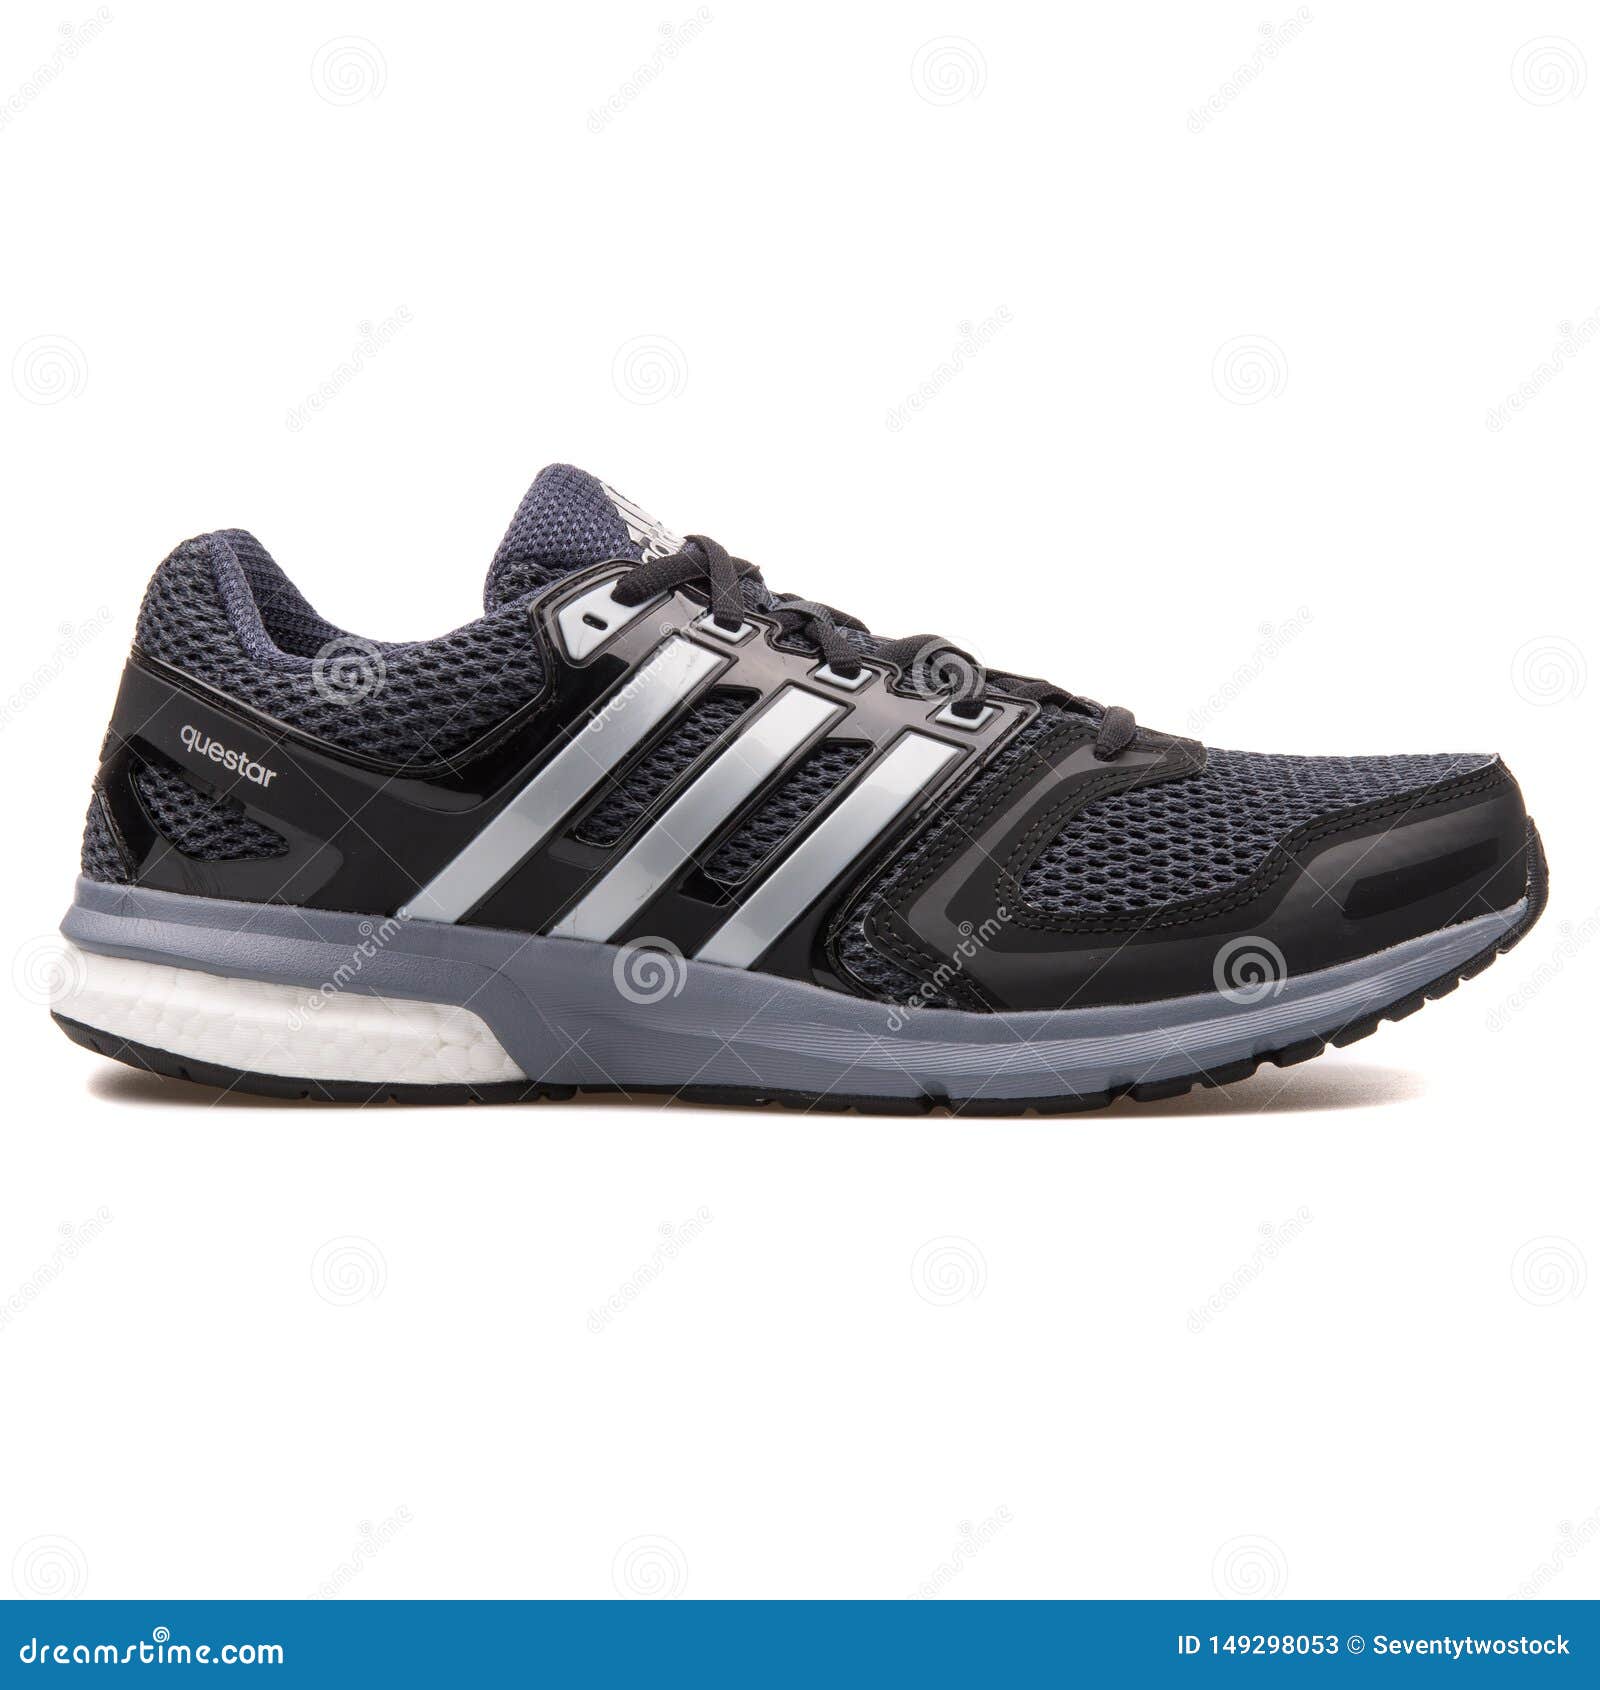 Adidas Questar Black Sneaker Editorial Stock Photo - Image of activity,  footwear: 149298053